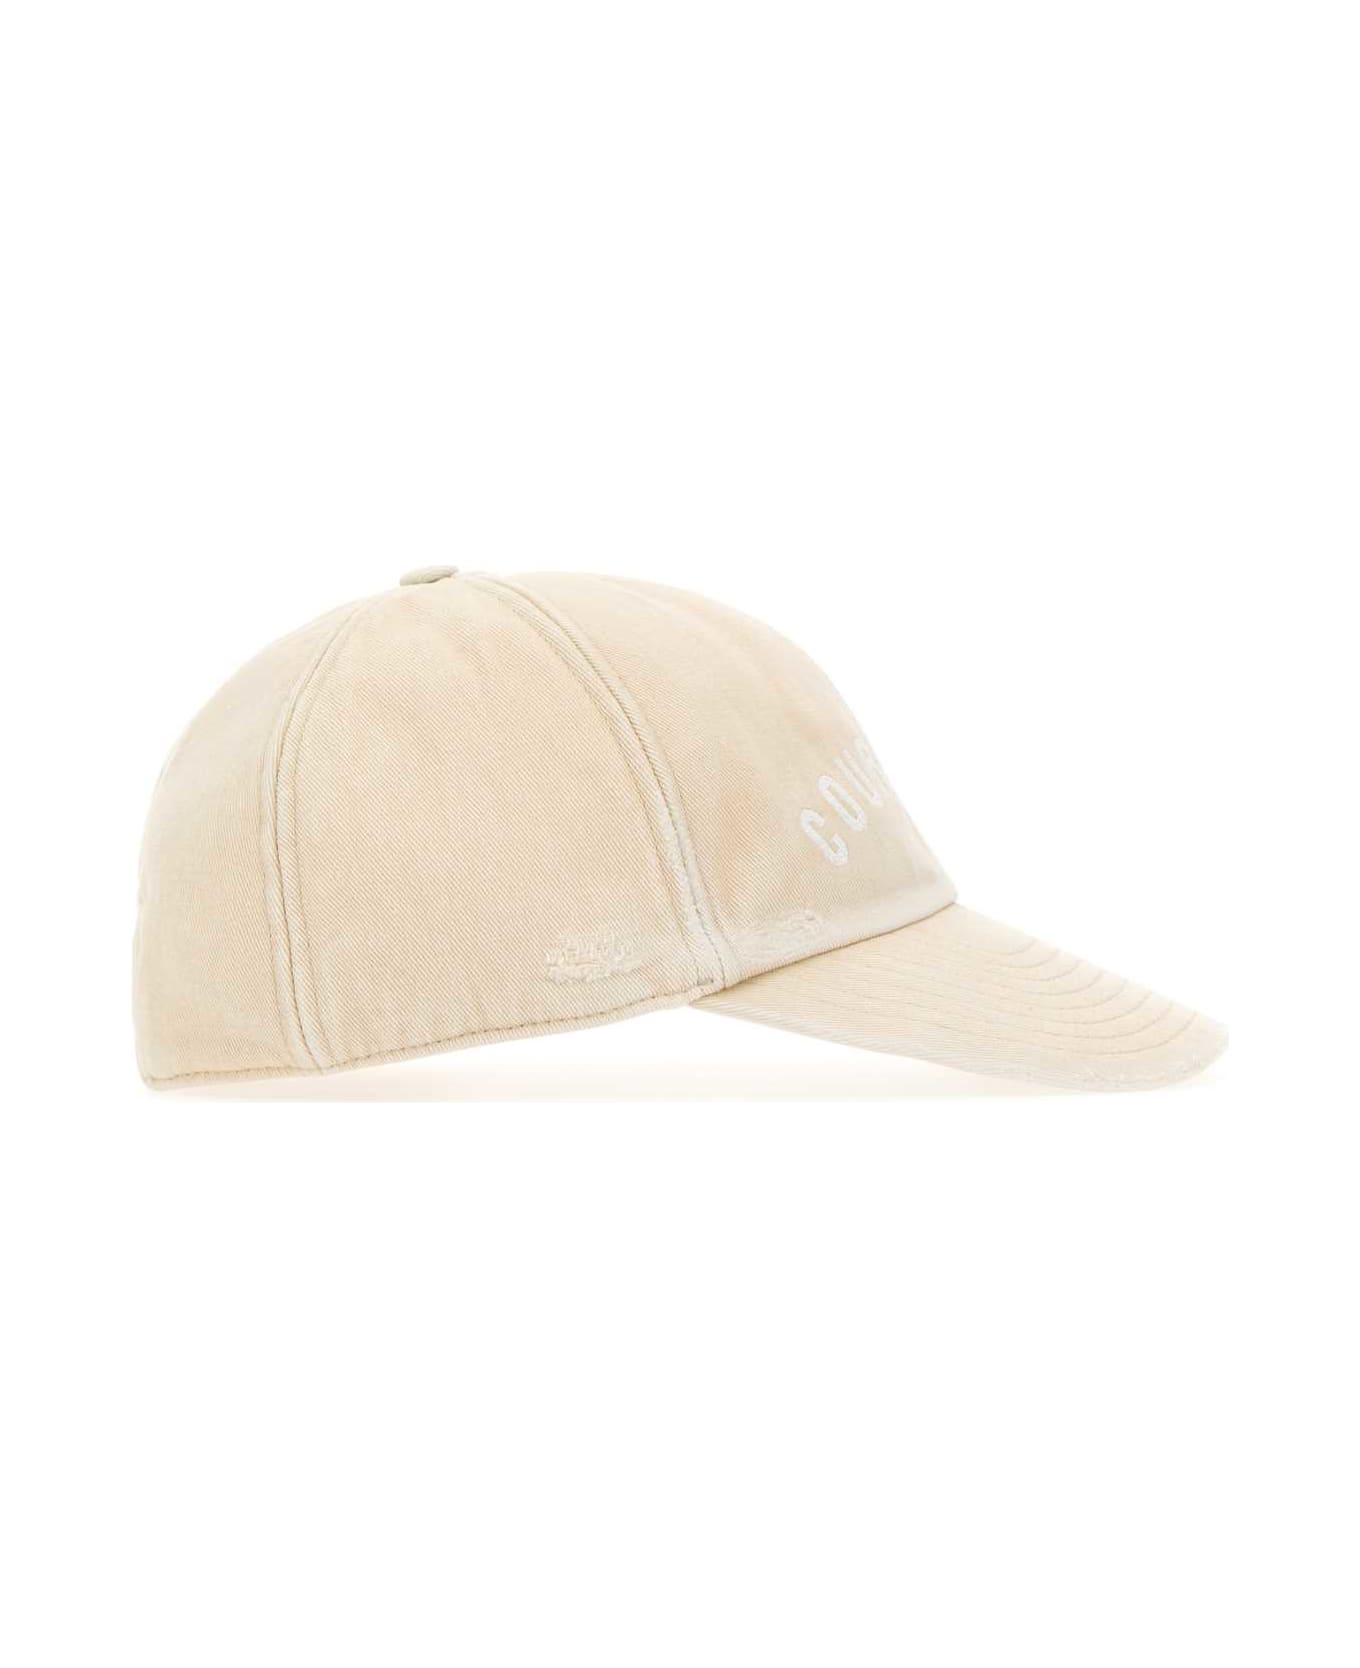 Courrèges Sand Cotton Baseball Cap - OATMEAL 帽子